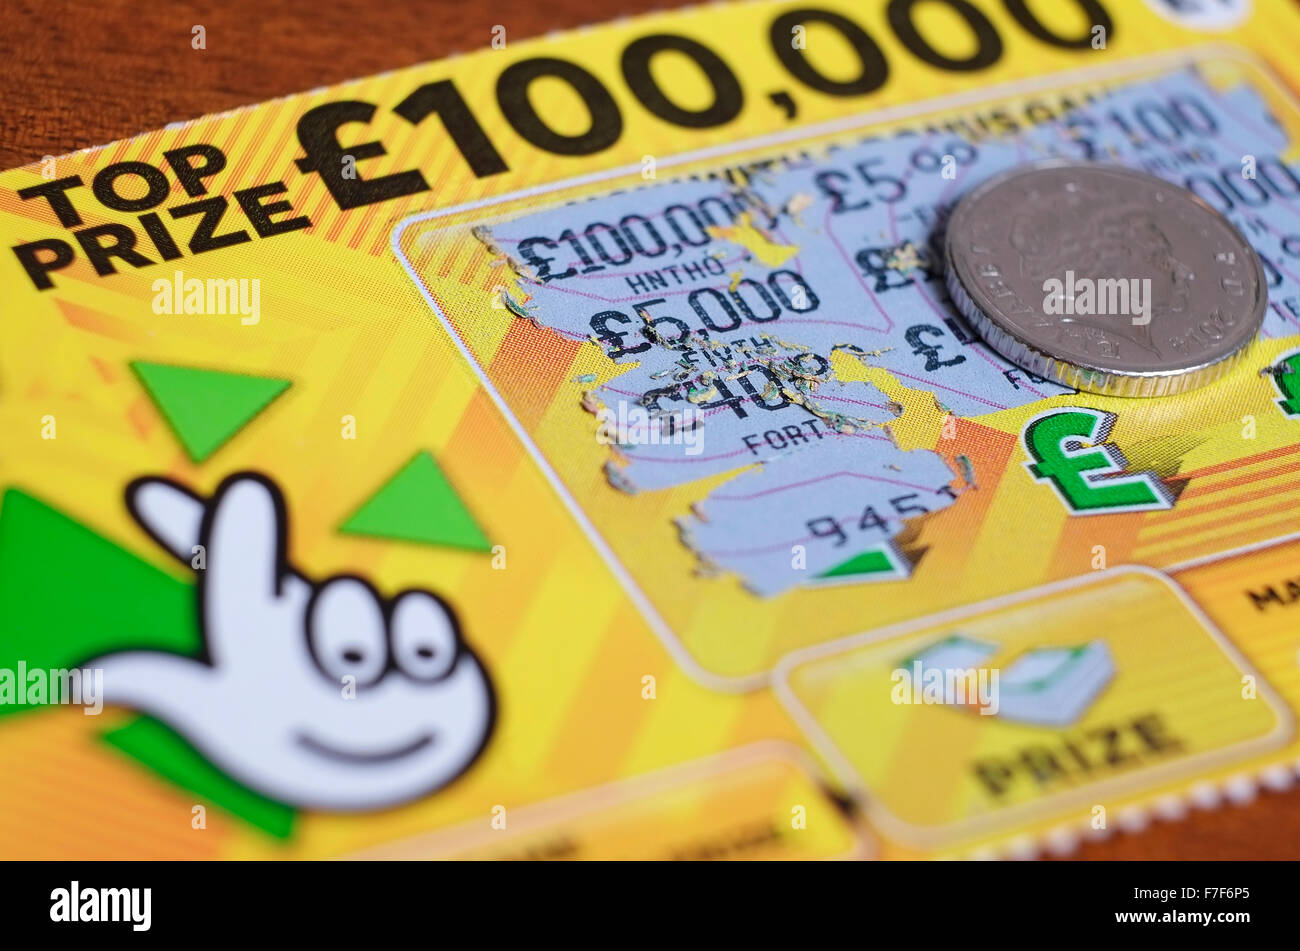 £100,000 lottery scratch card Stock Photo